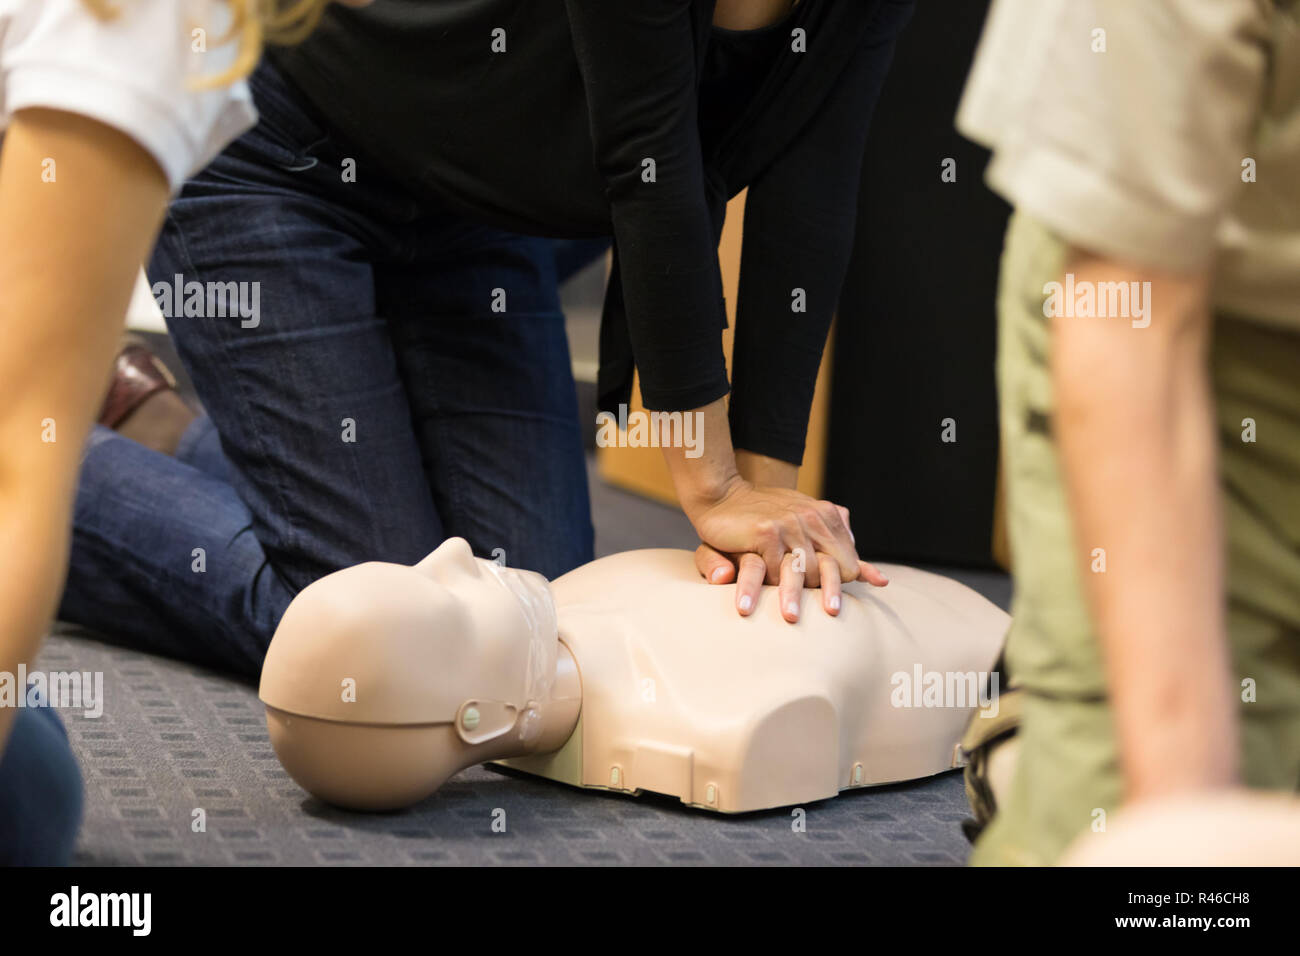 First aid CPR seminar. Stock Photo